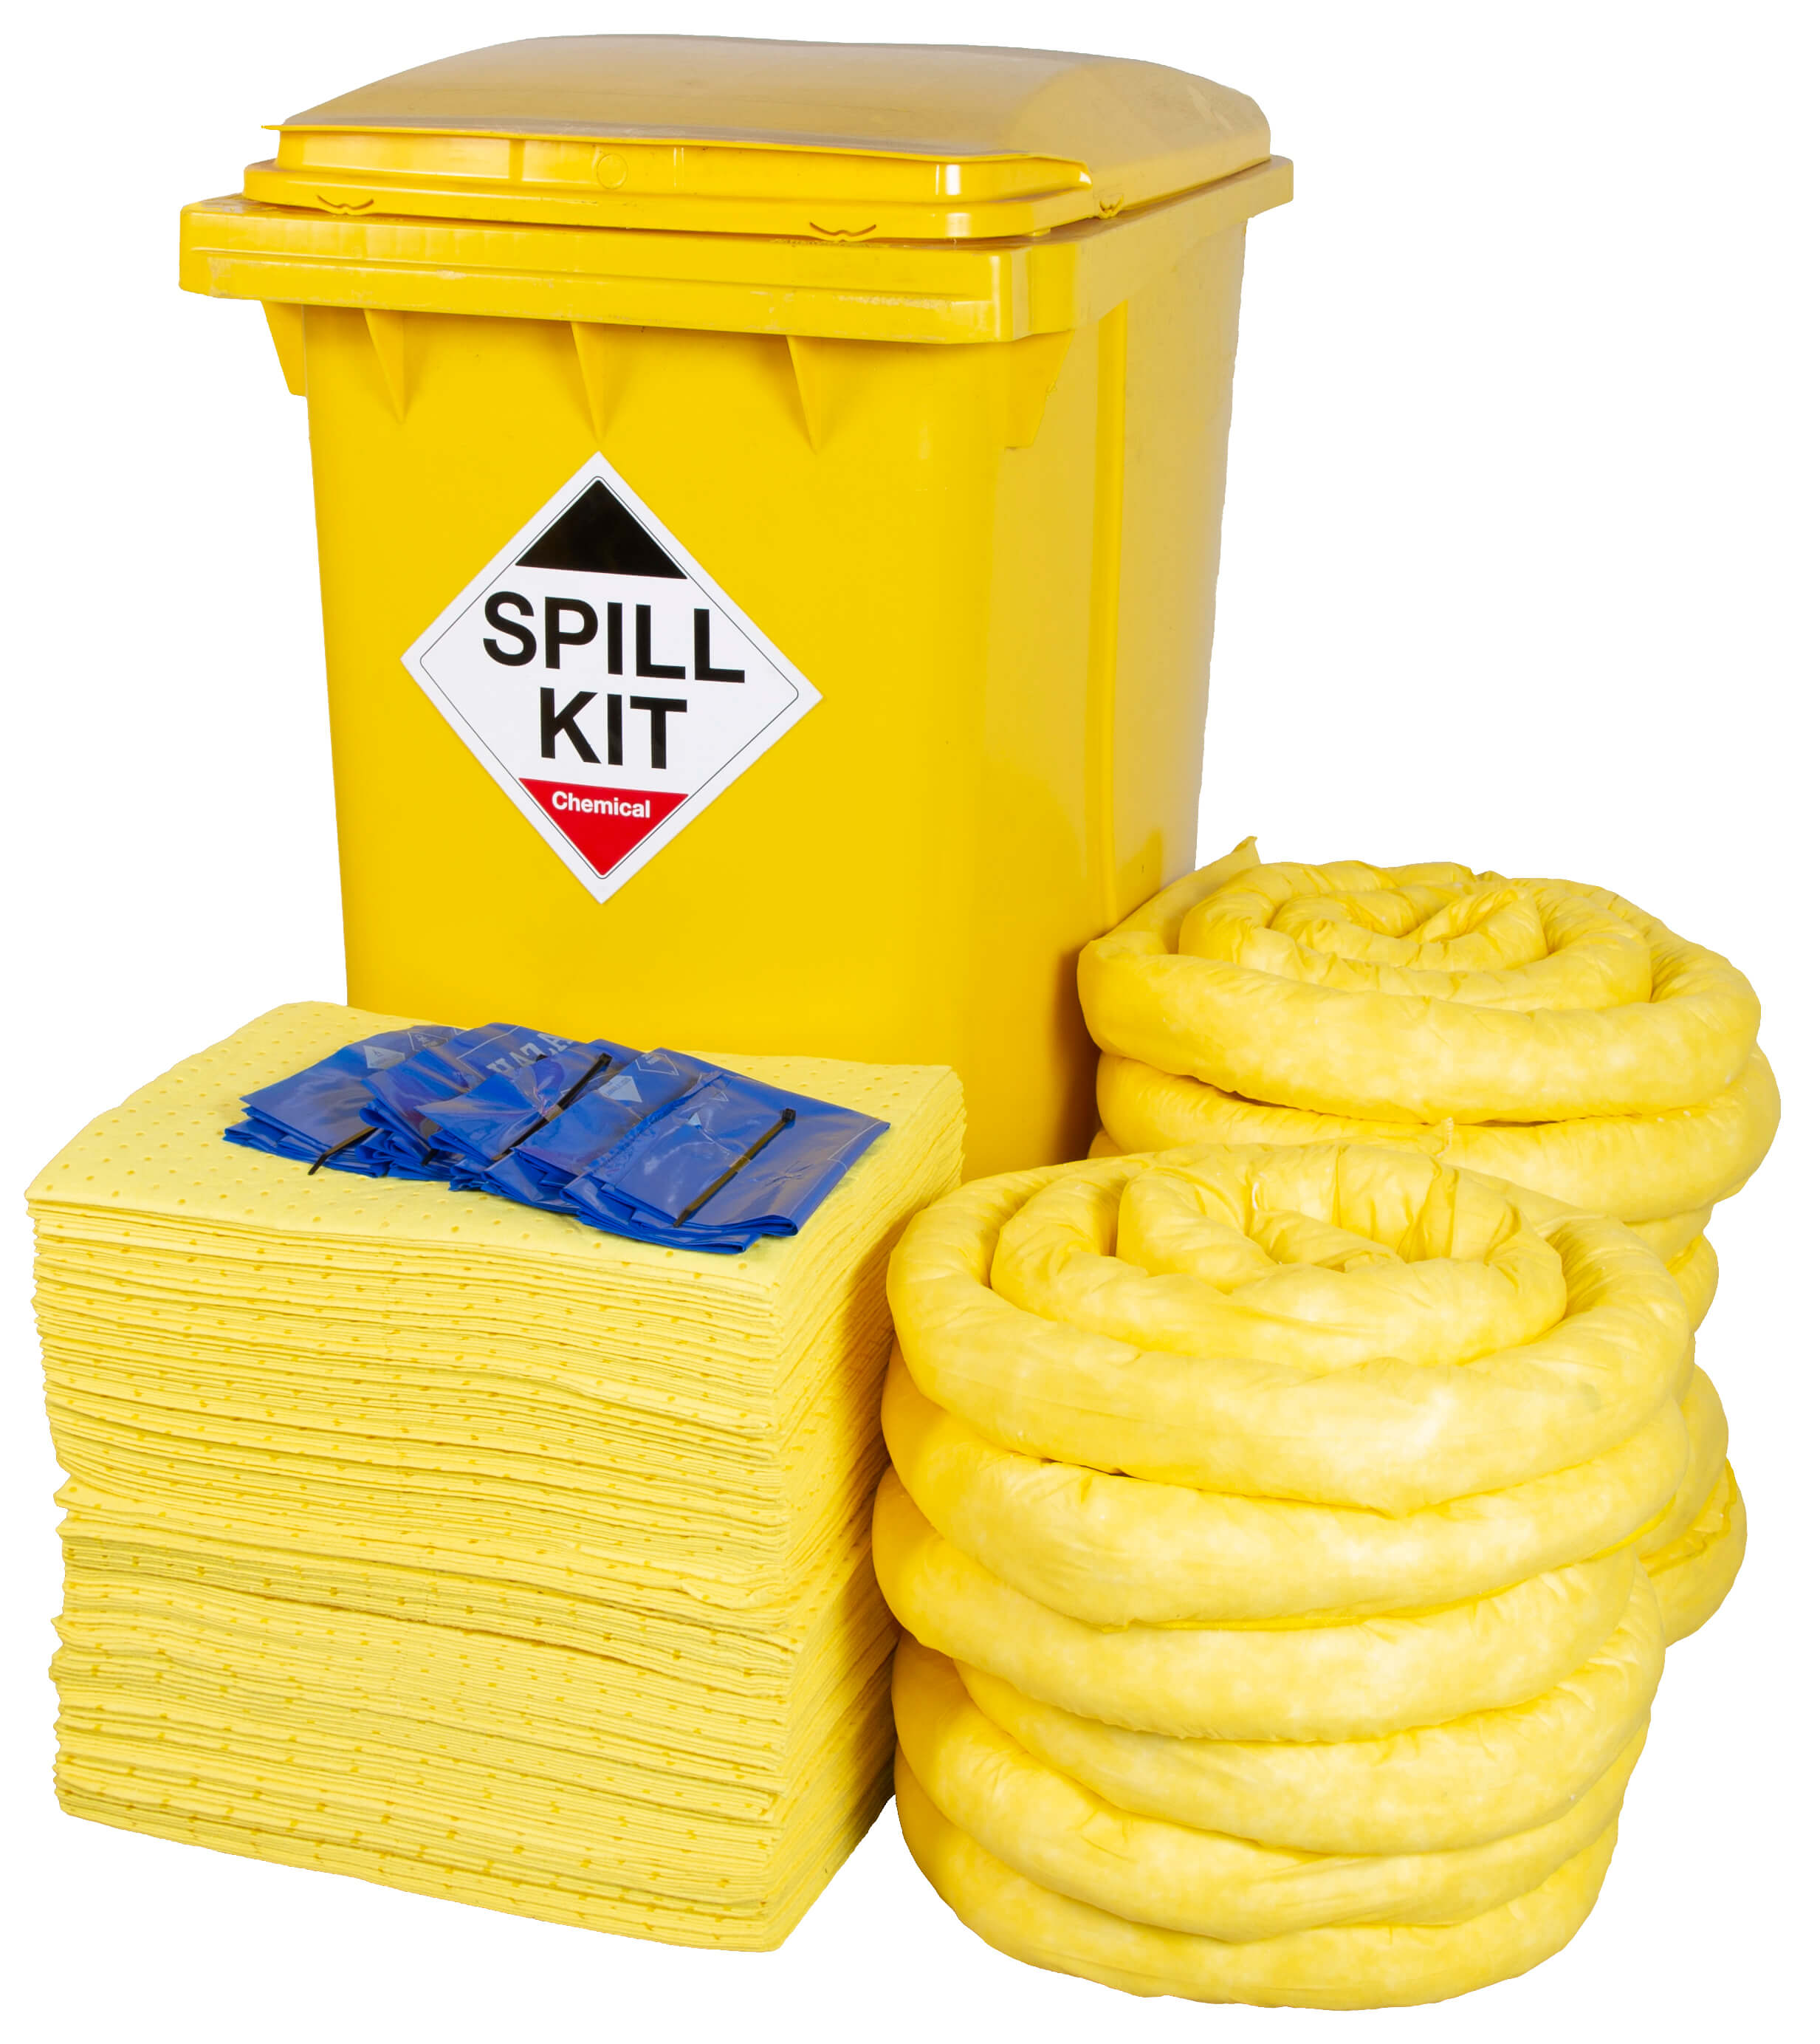 Chemical Kit - YellowvWheelie Bin